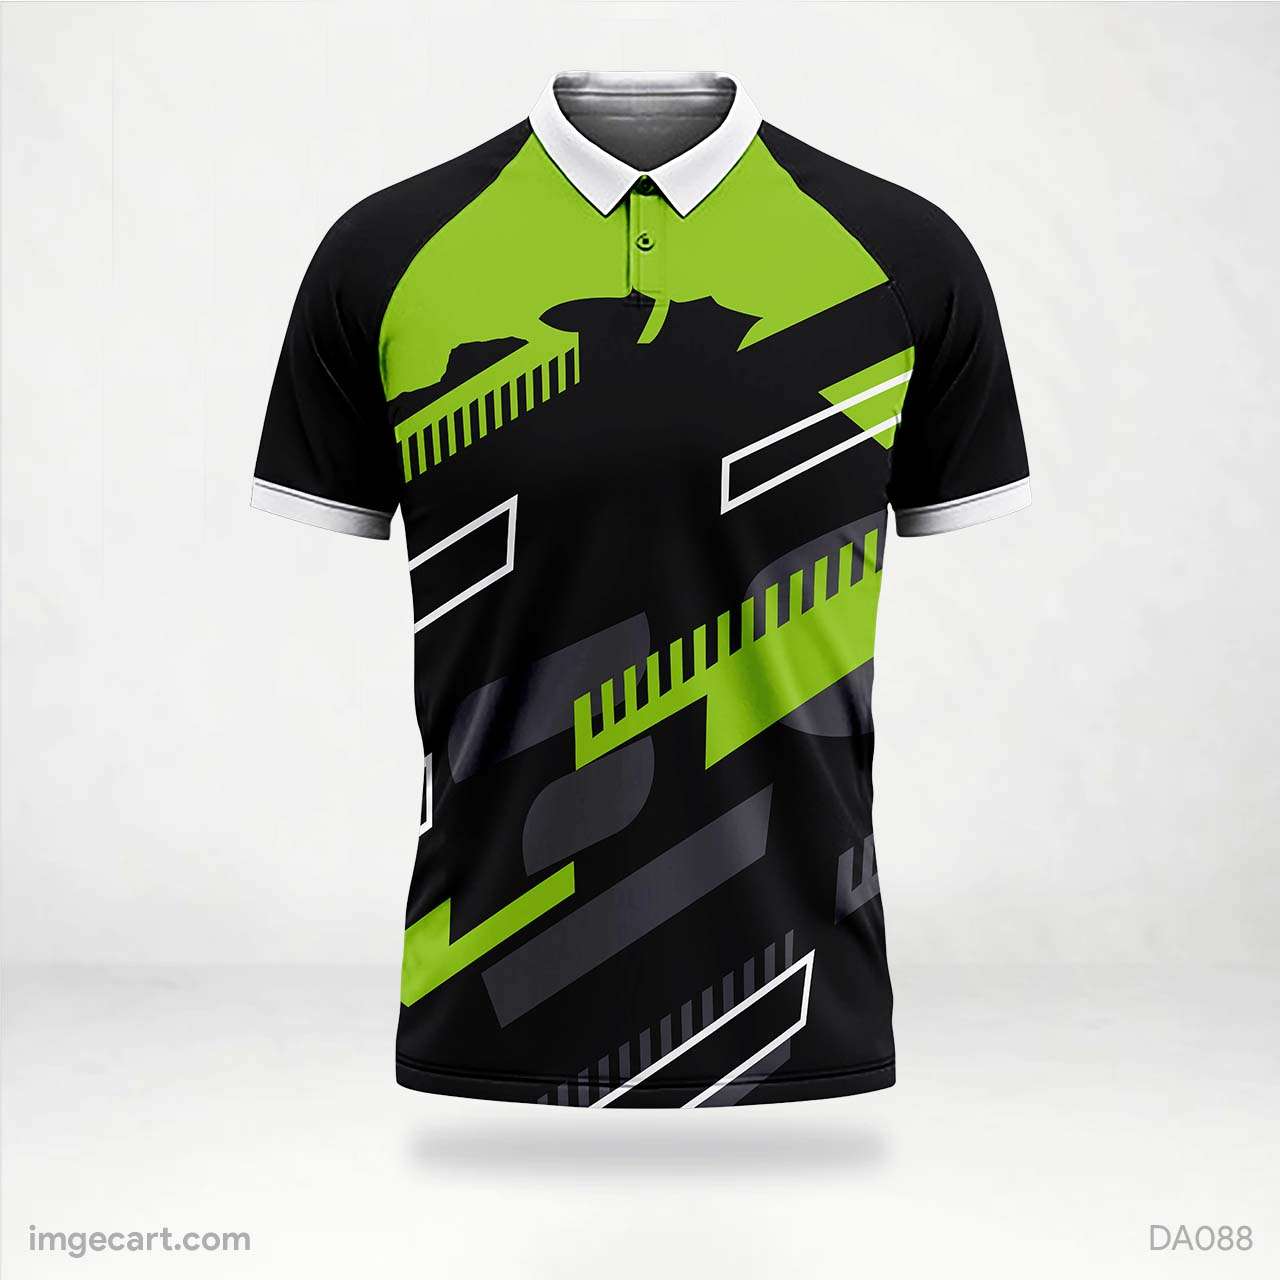 Cricket Jersey Design Black with Green Pattern - imgecart